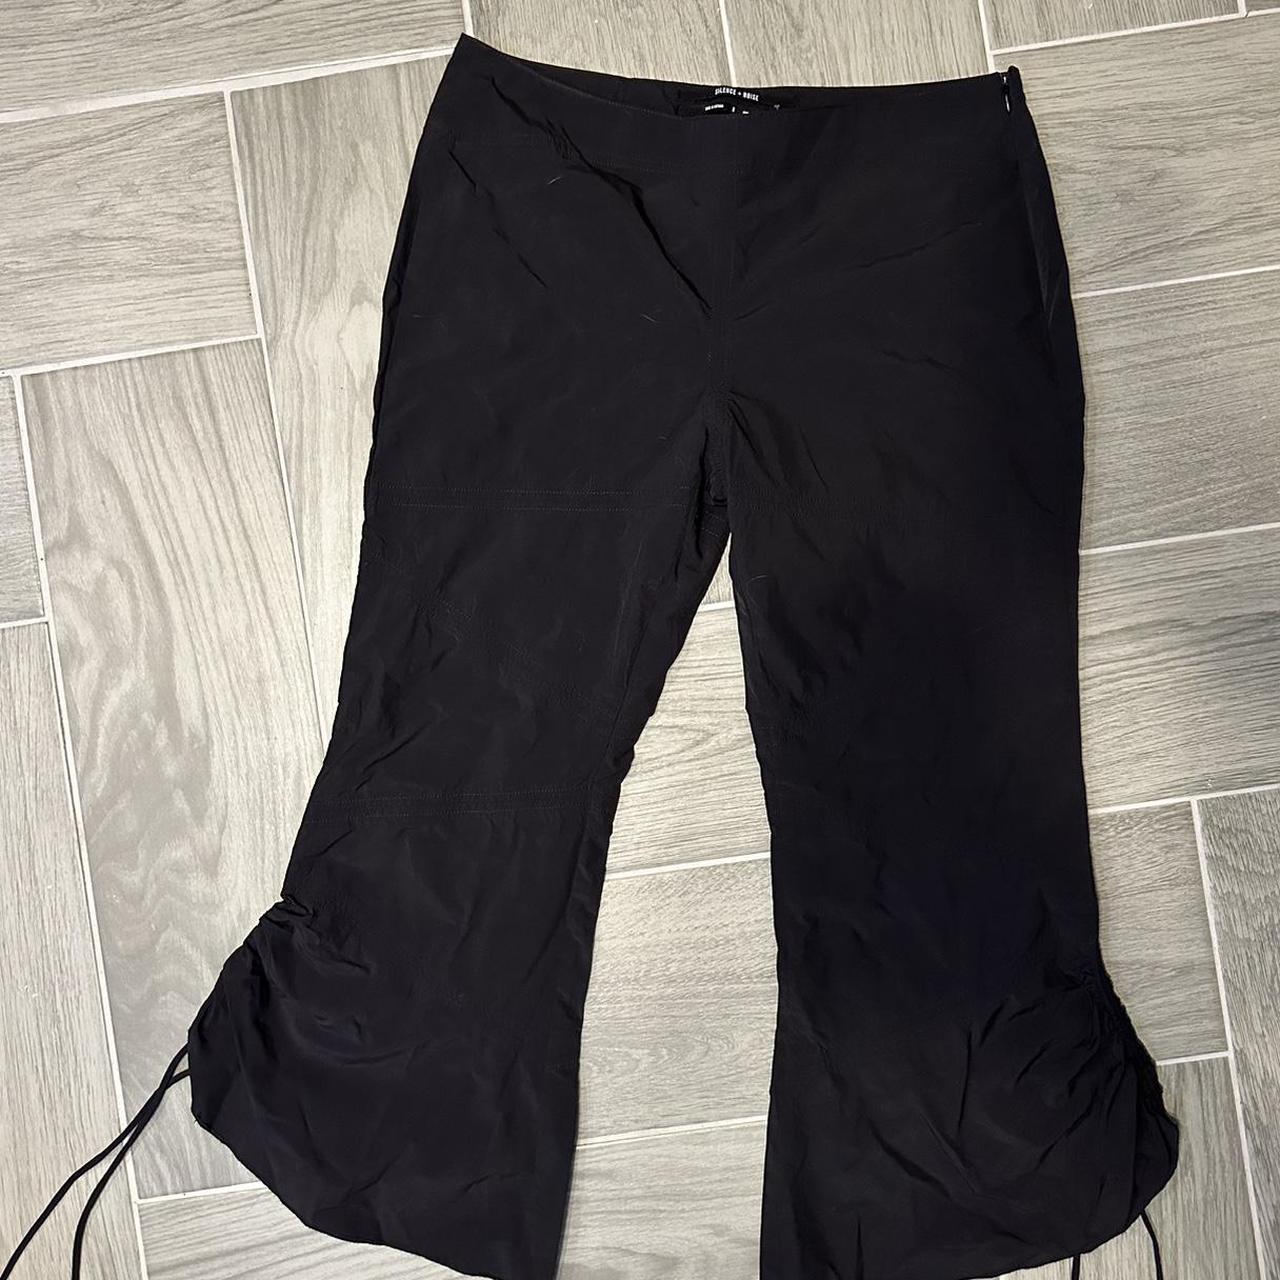 Vanity women's 9/14 stretch Capri pants This item - Depop